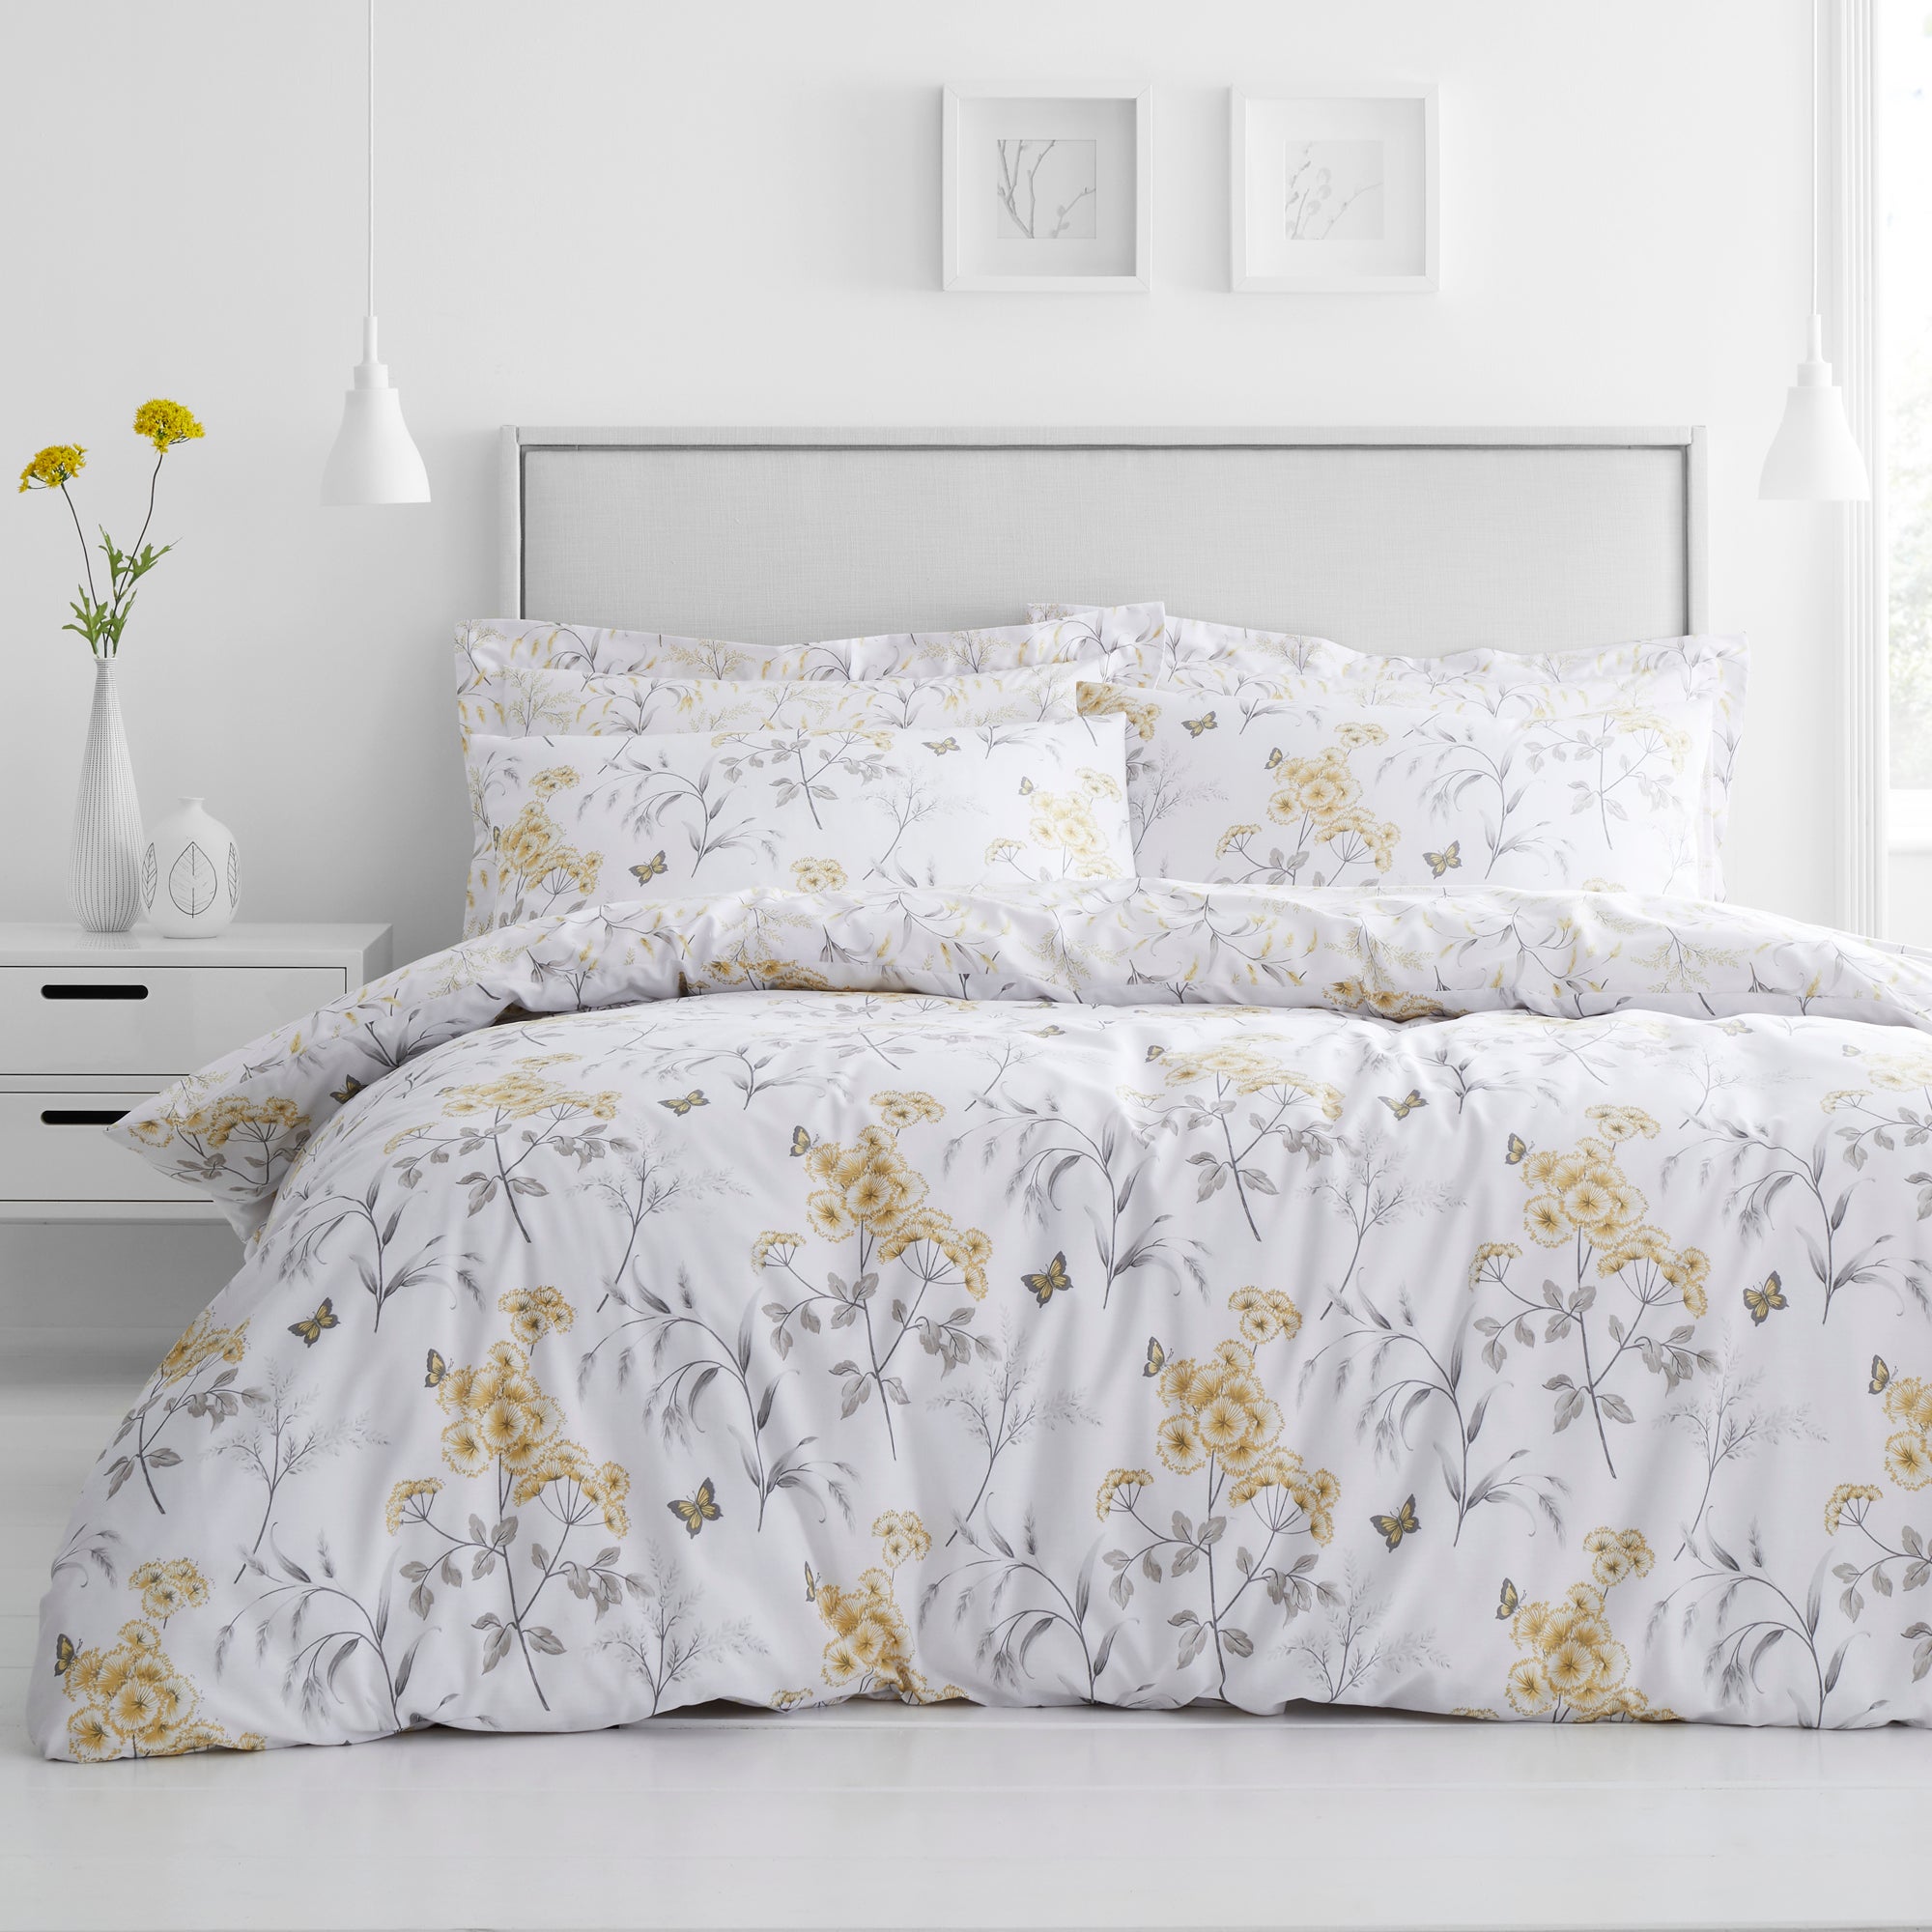 Maria Ochre Reversible Floral Duvet Cover And Pillowcase Set White